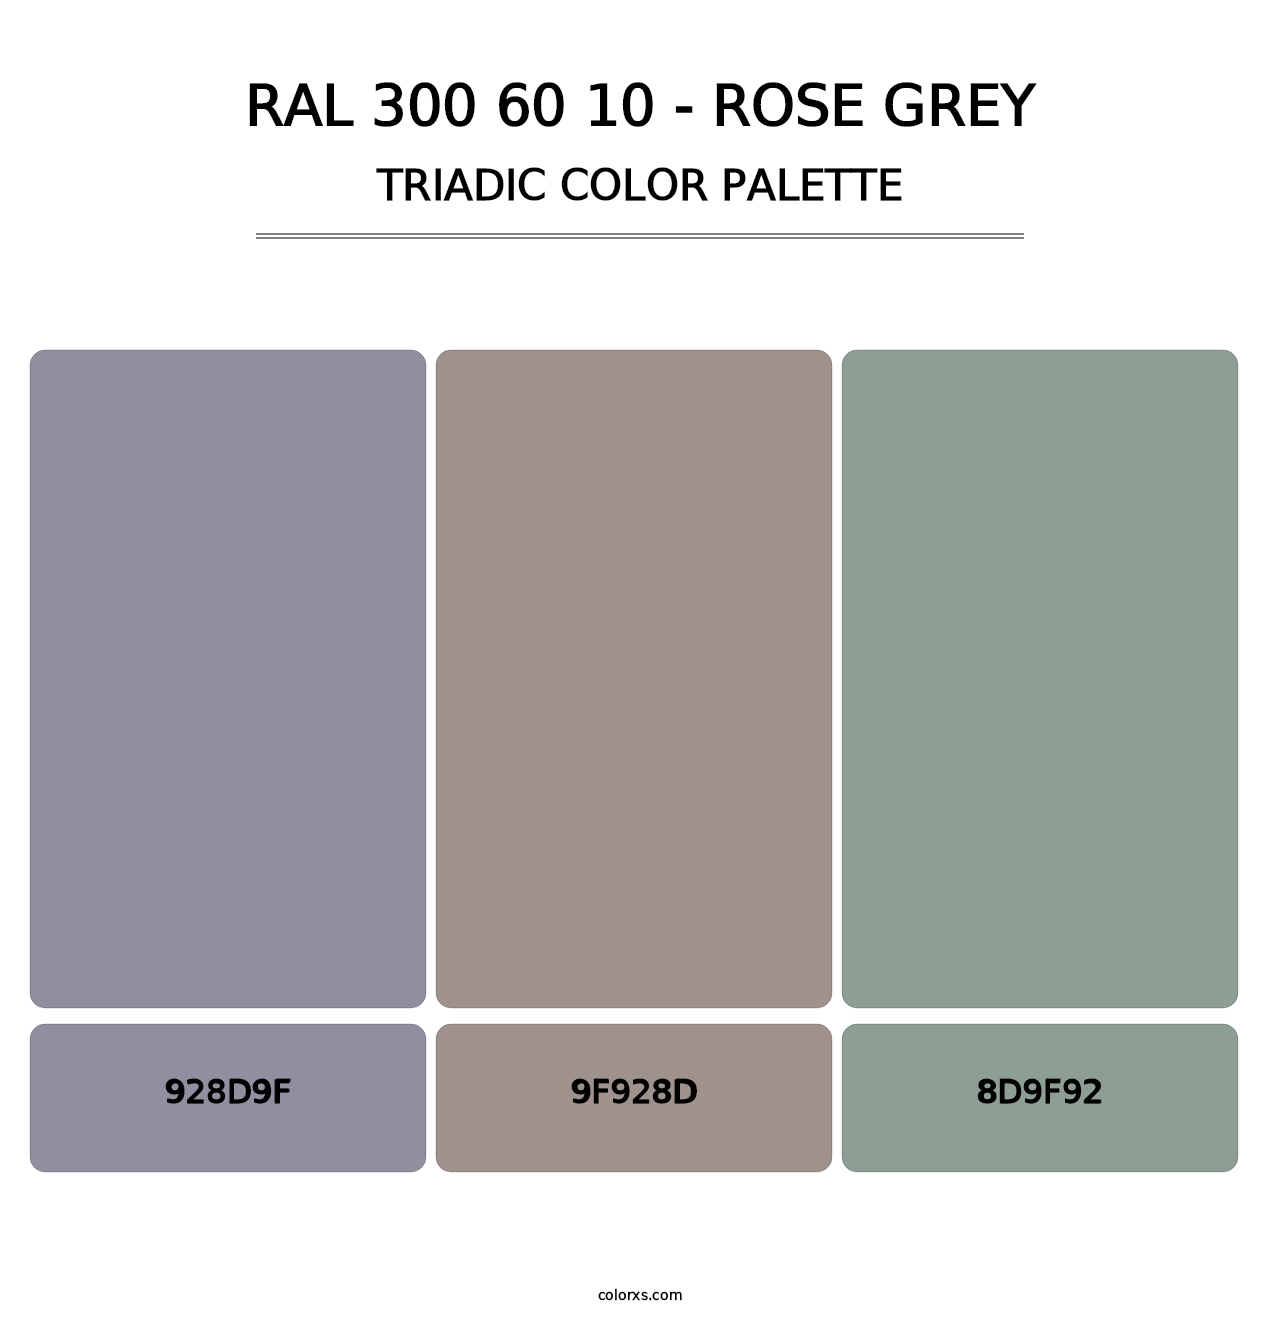 RAL 300 60 10 - Rose Grey - Triadic Color Palette